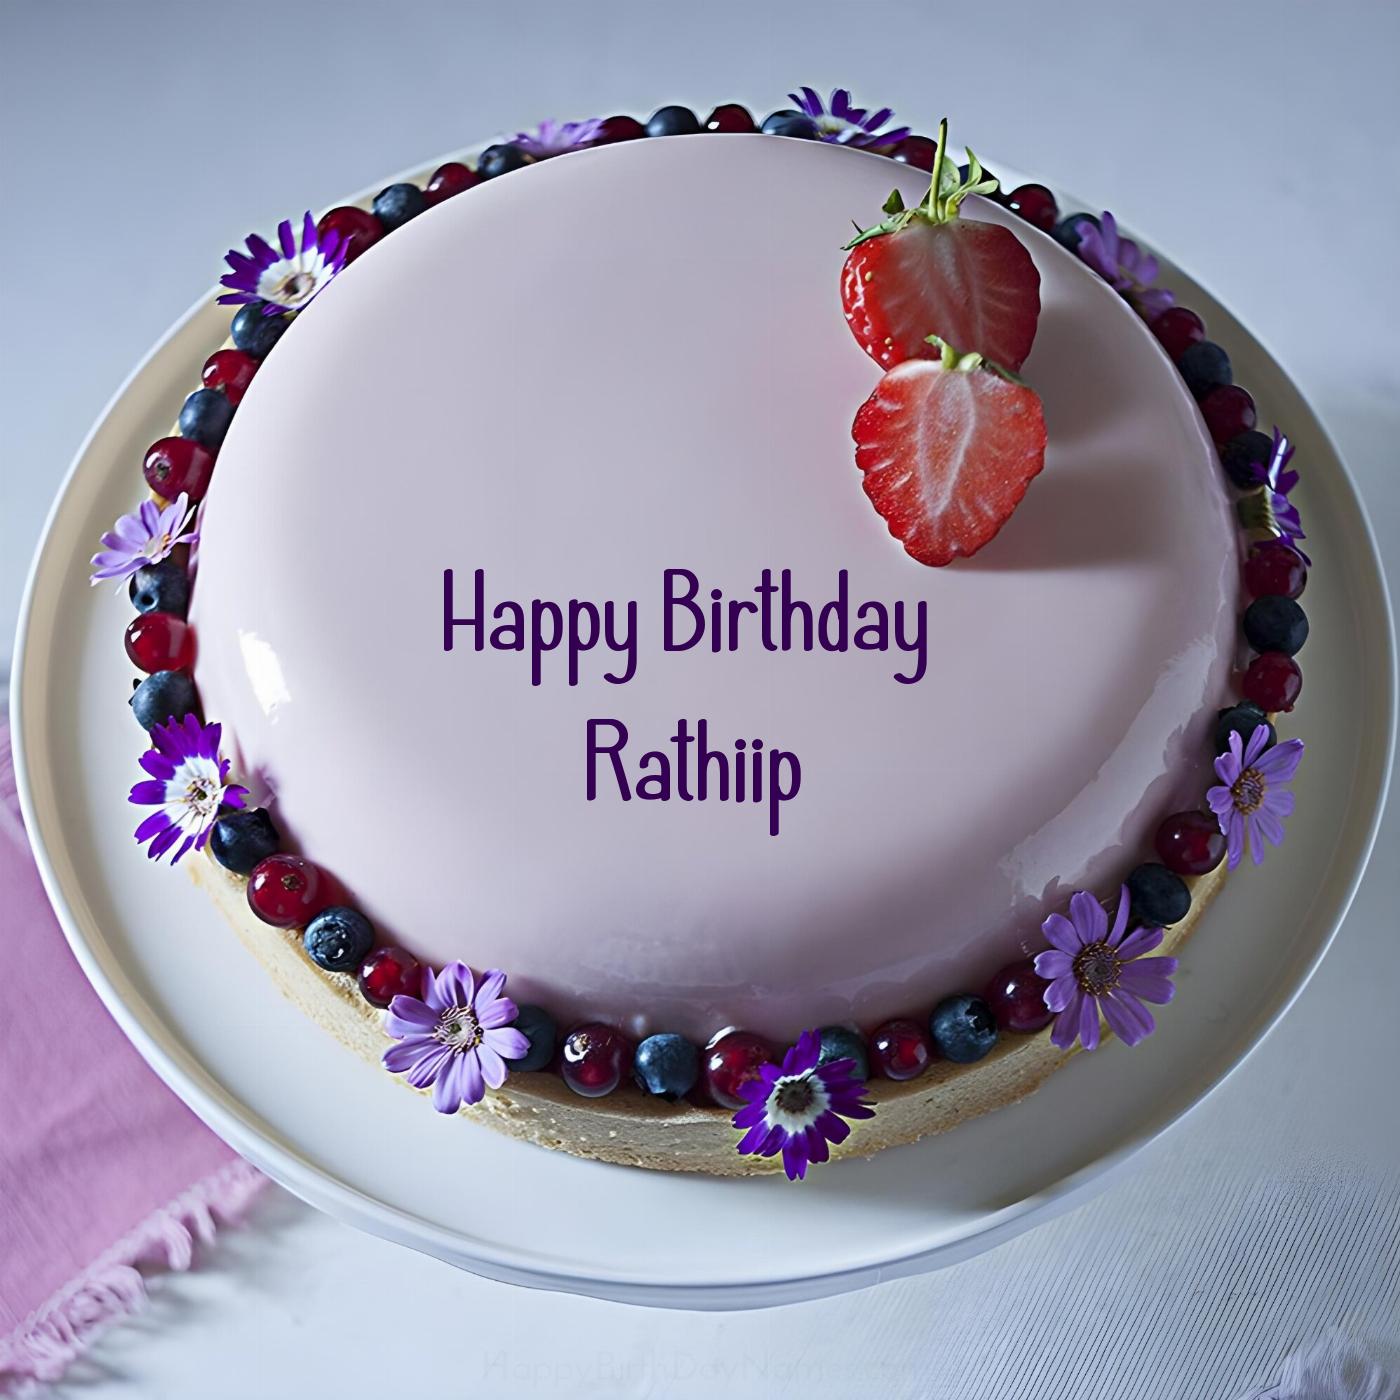 Happy Birthday Rathiip Strawberry Flowers Cake